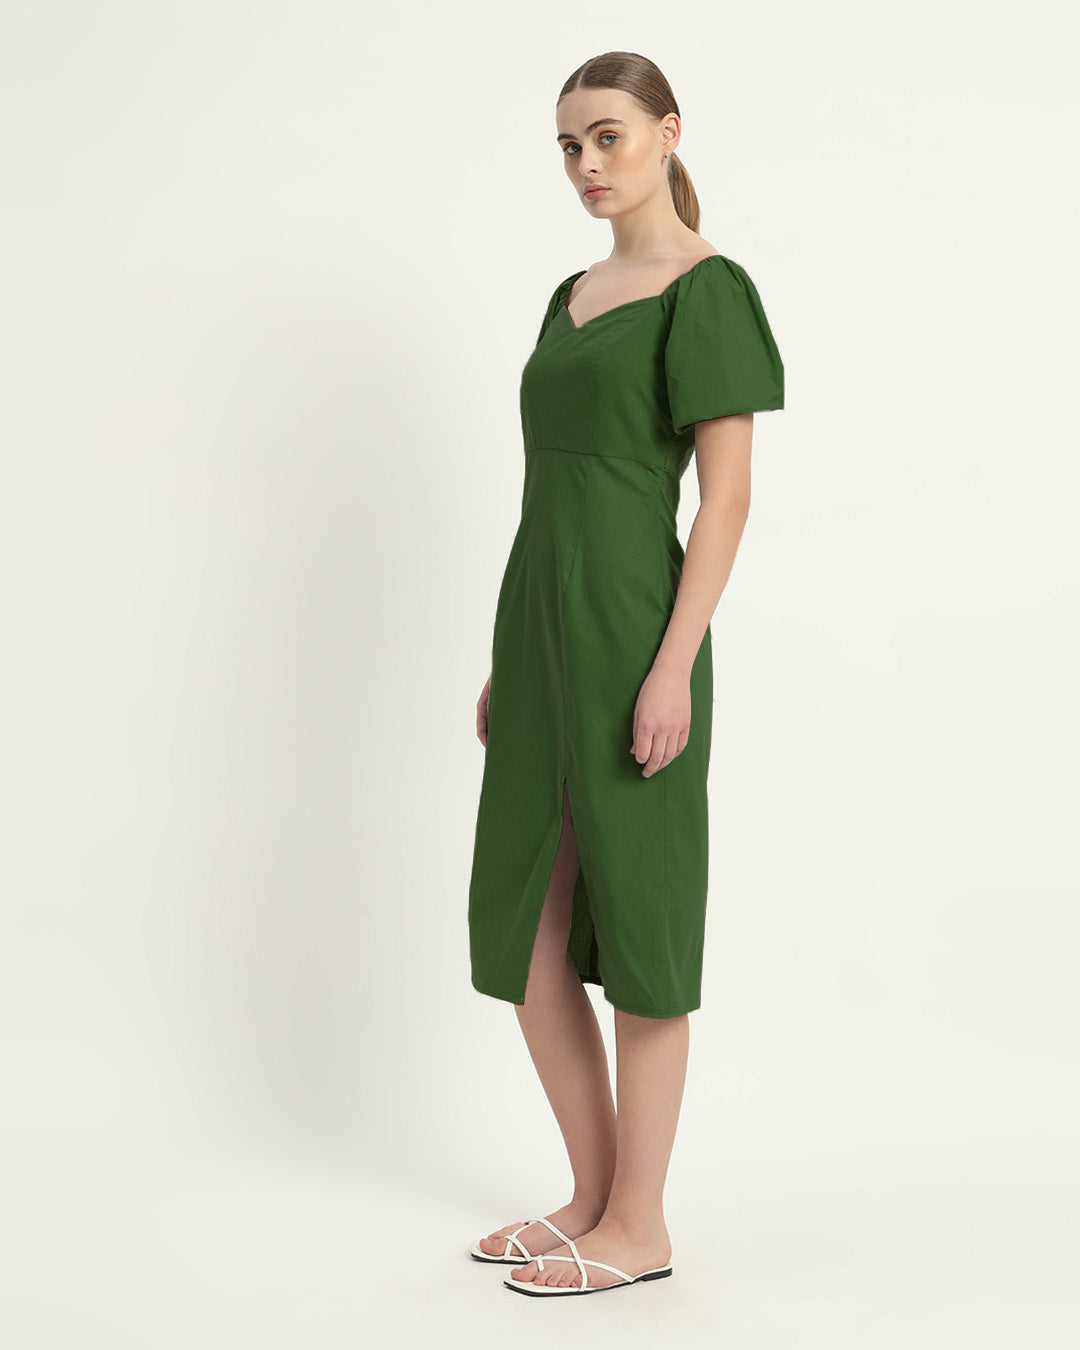 The Emerald Erwin Cotton Dress